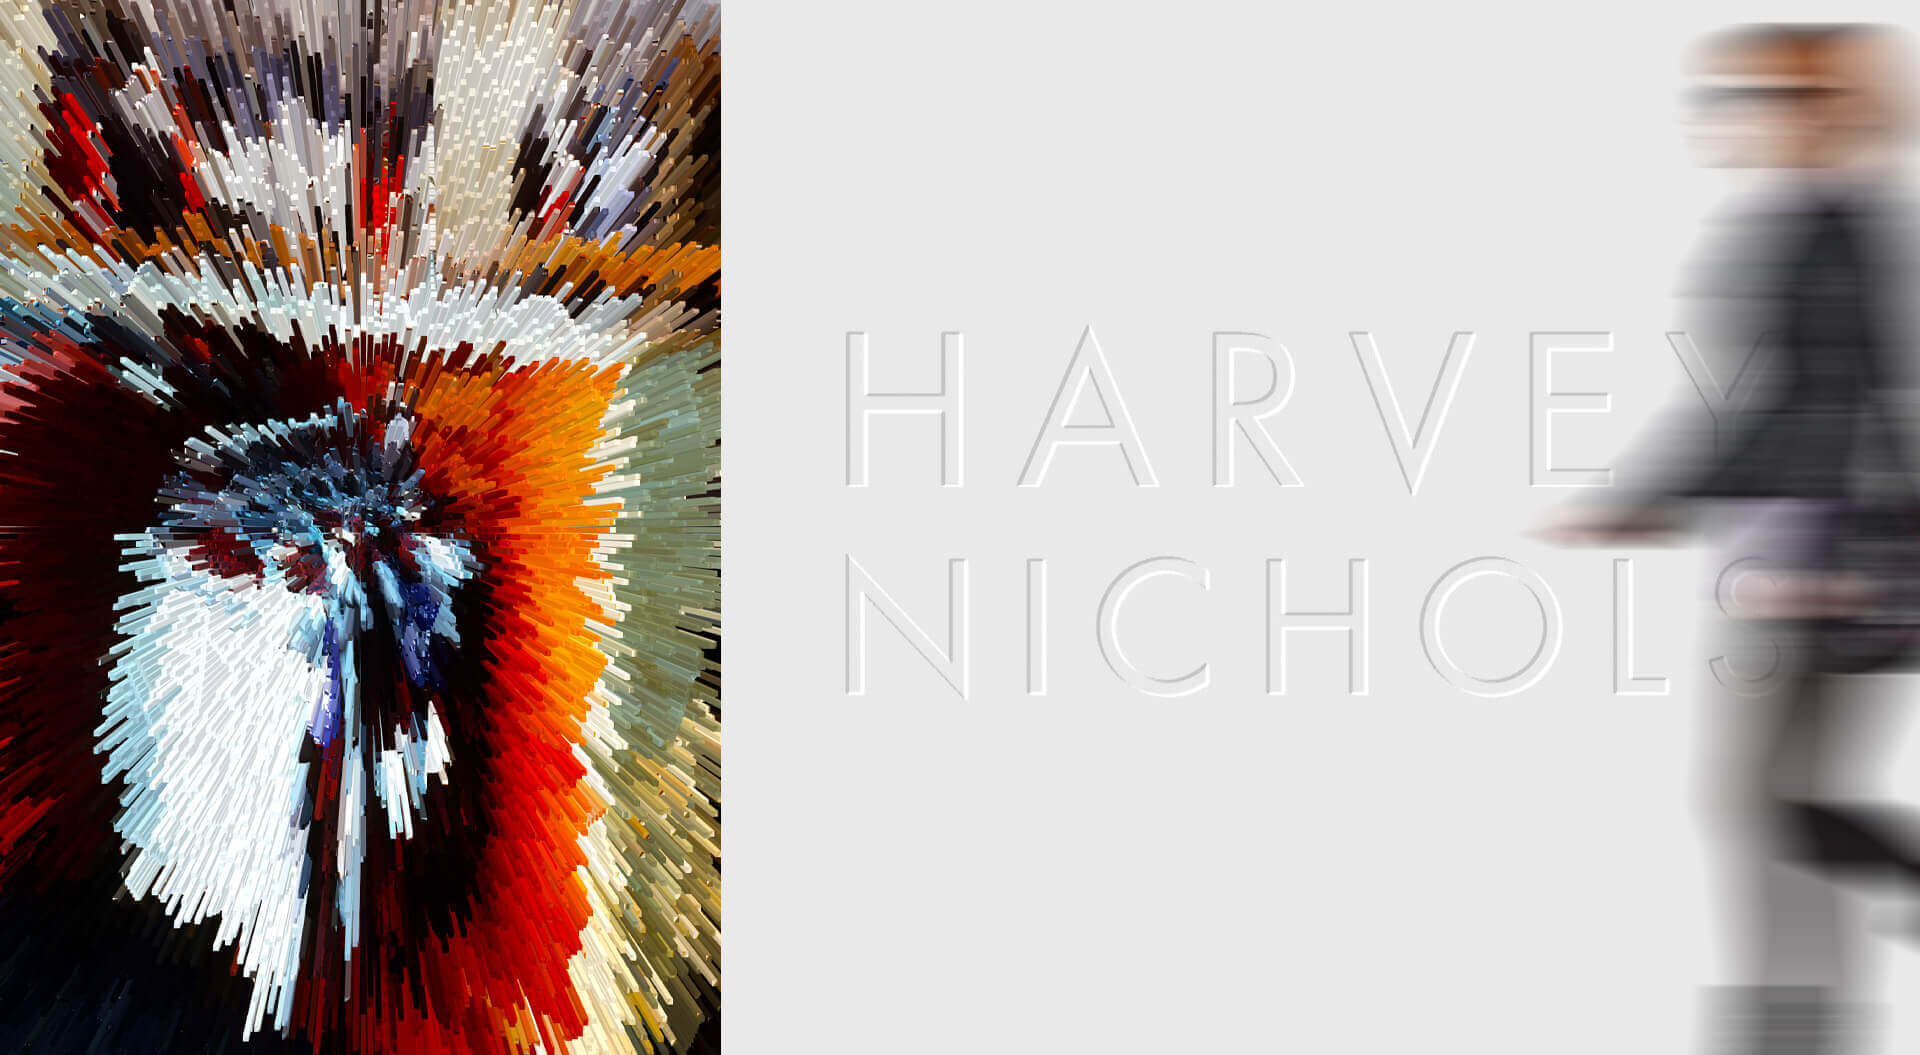 Harvey Nichols fashion department store design